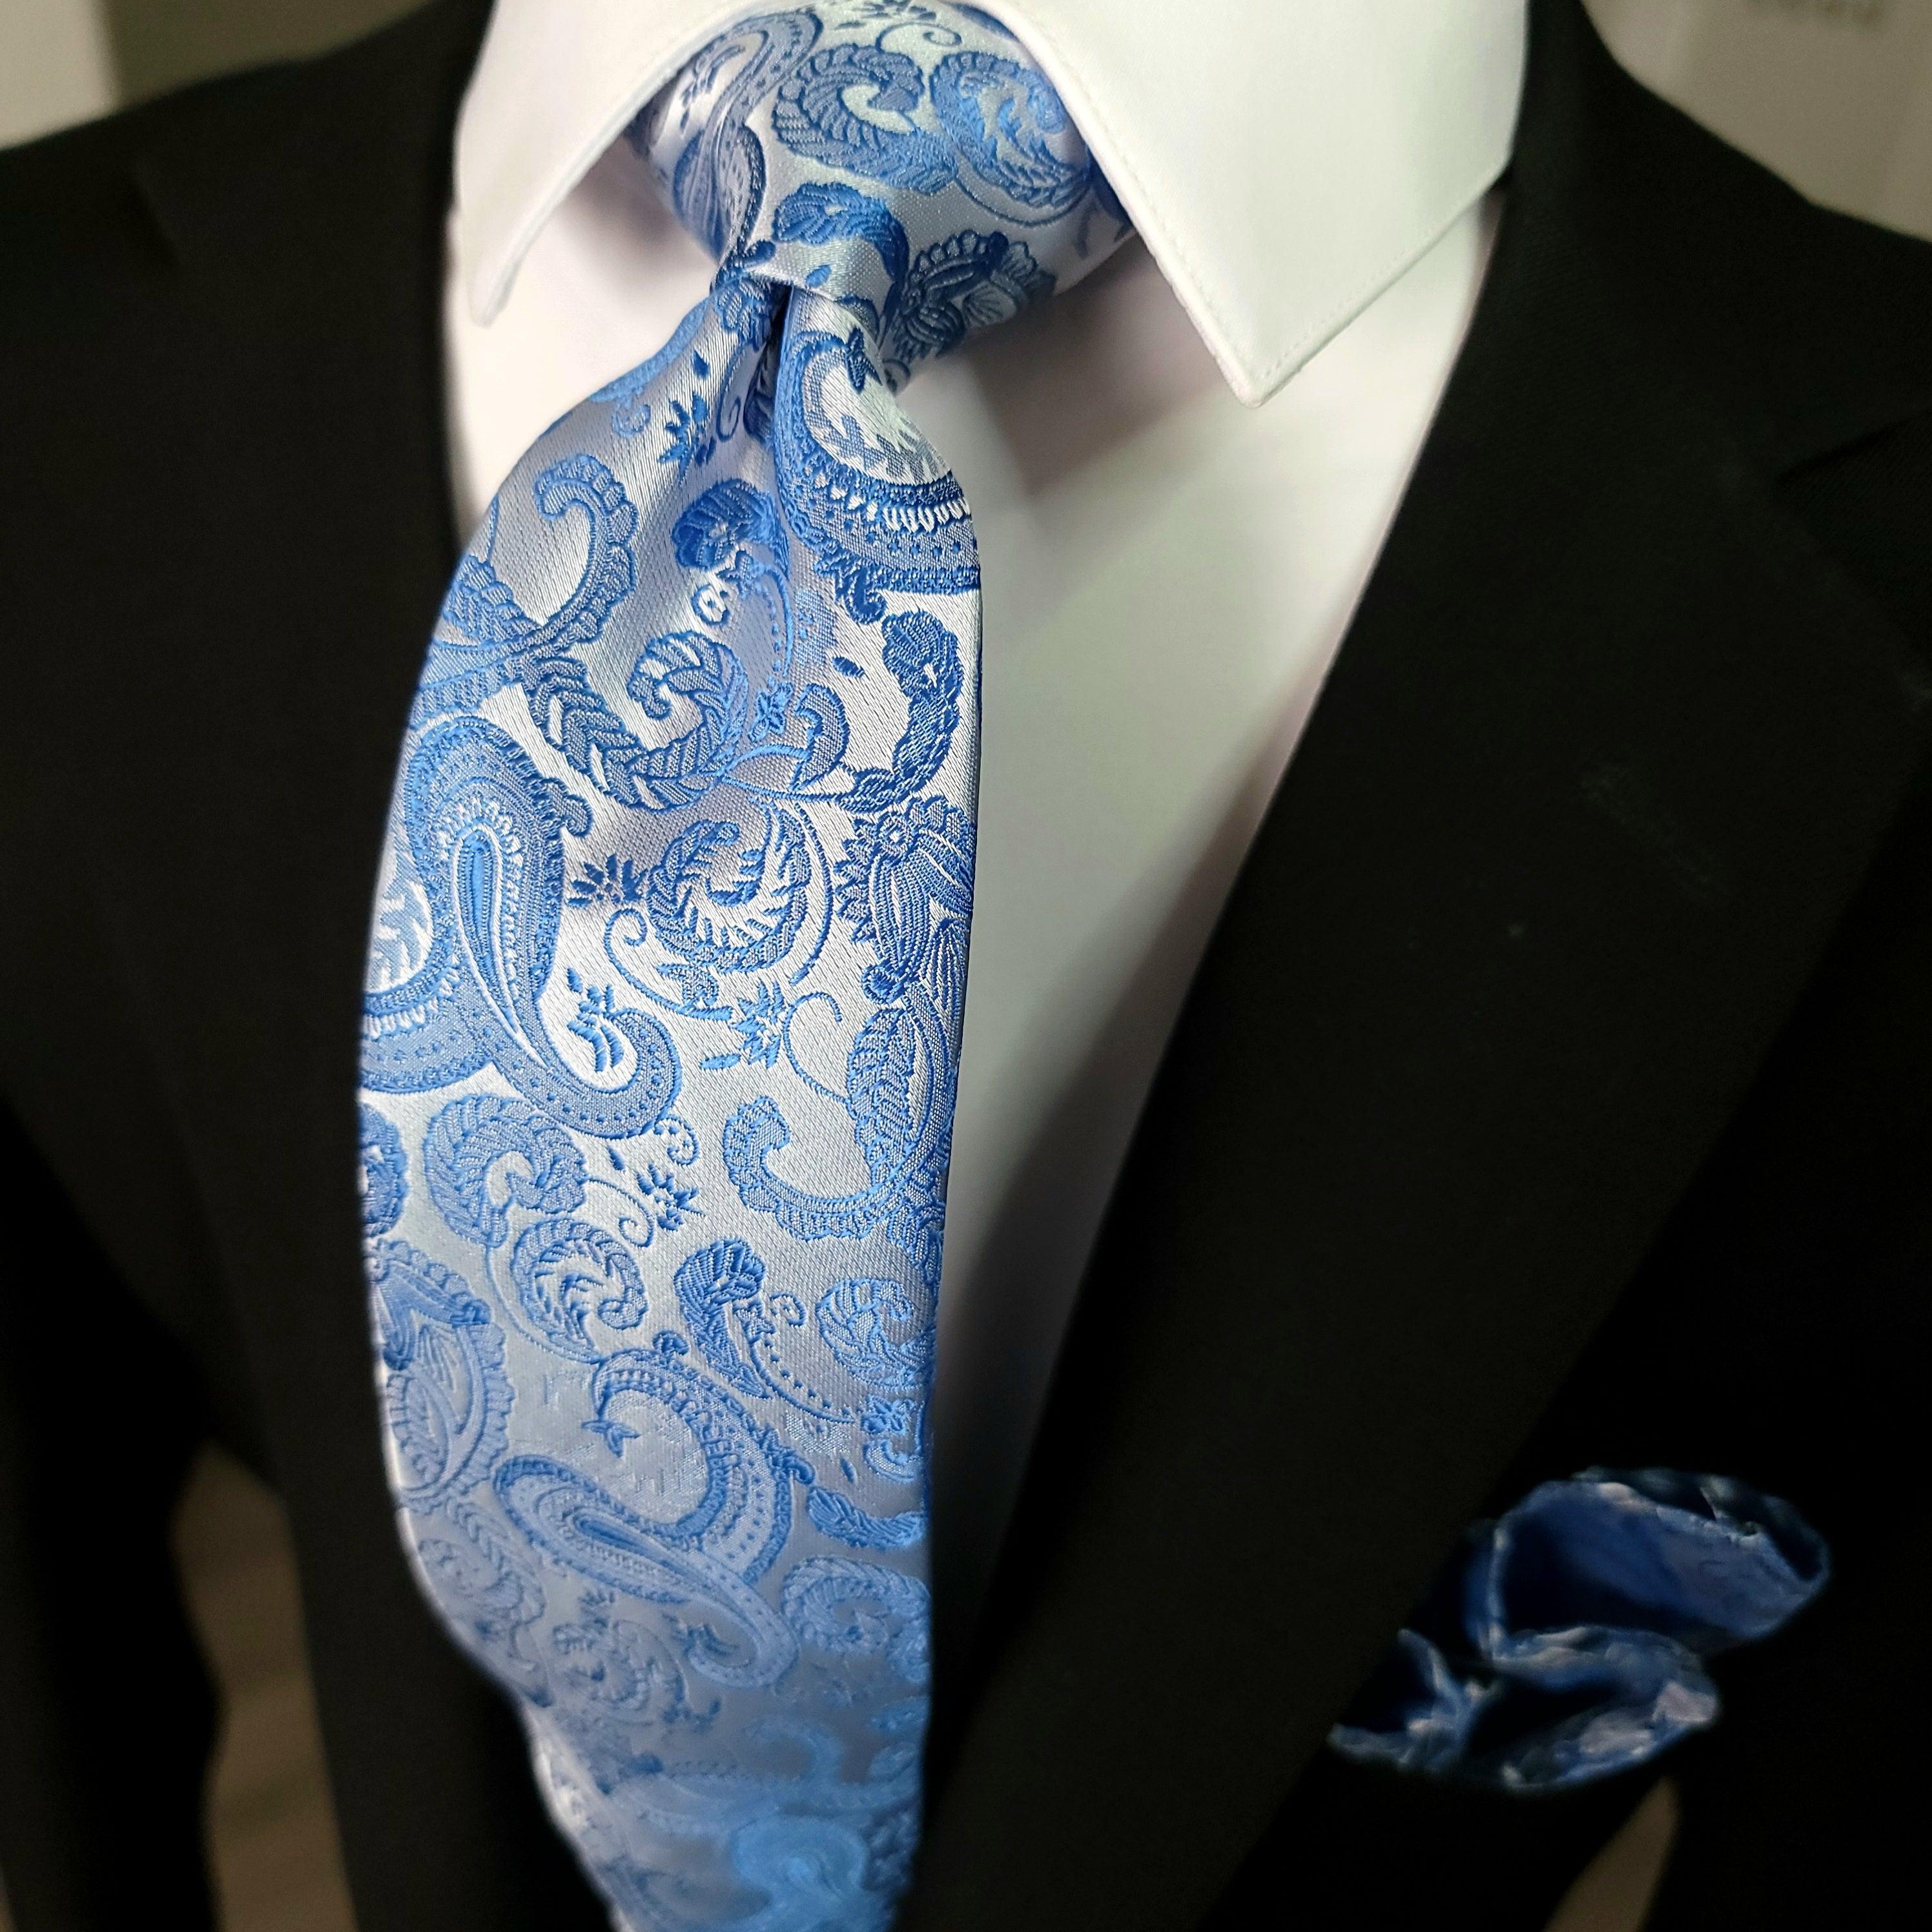 Light Blue Floral Paisley Silk Tie Pocket Square Cufflink Set - STYLETIE